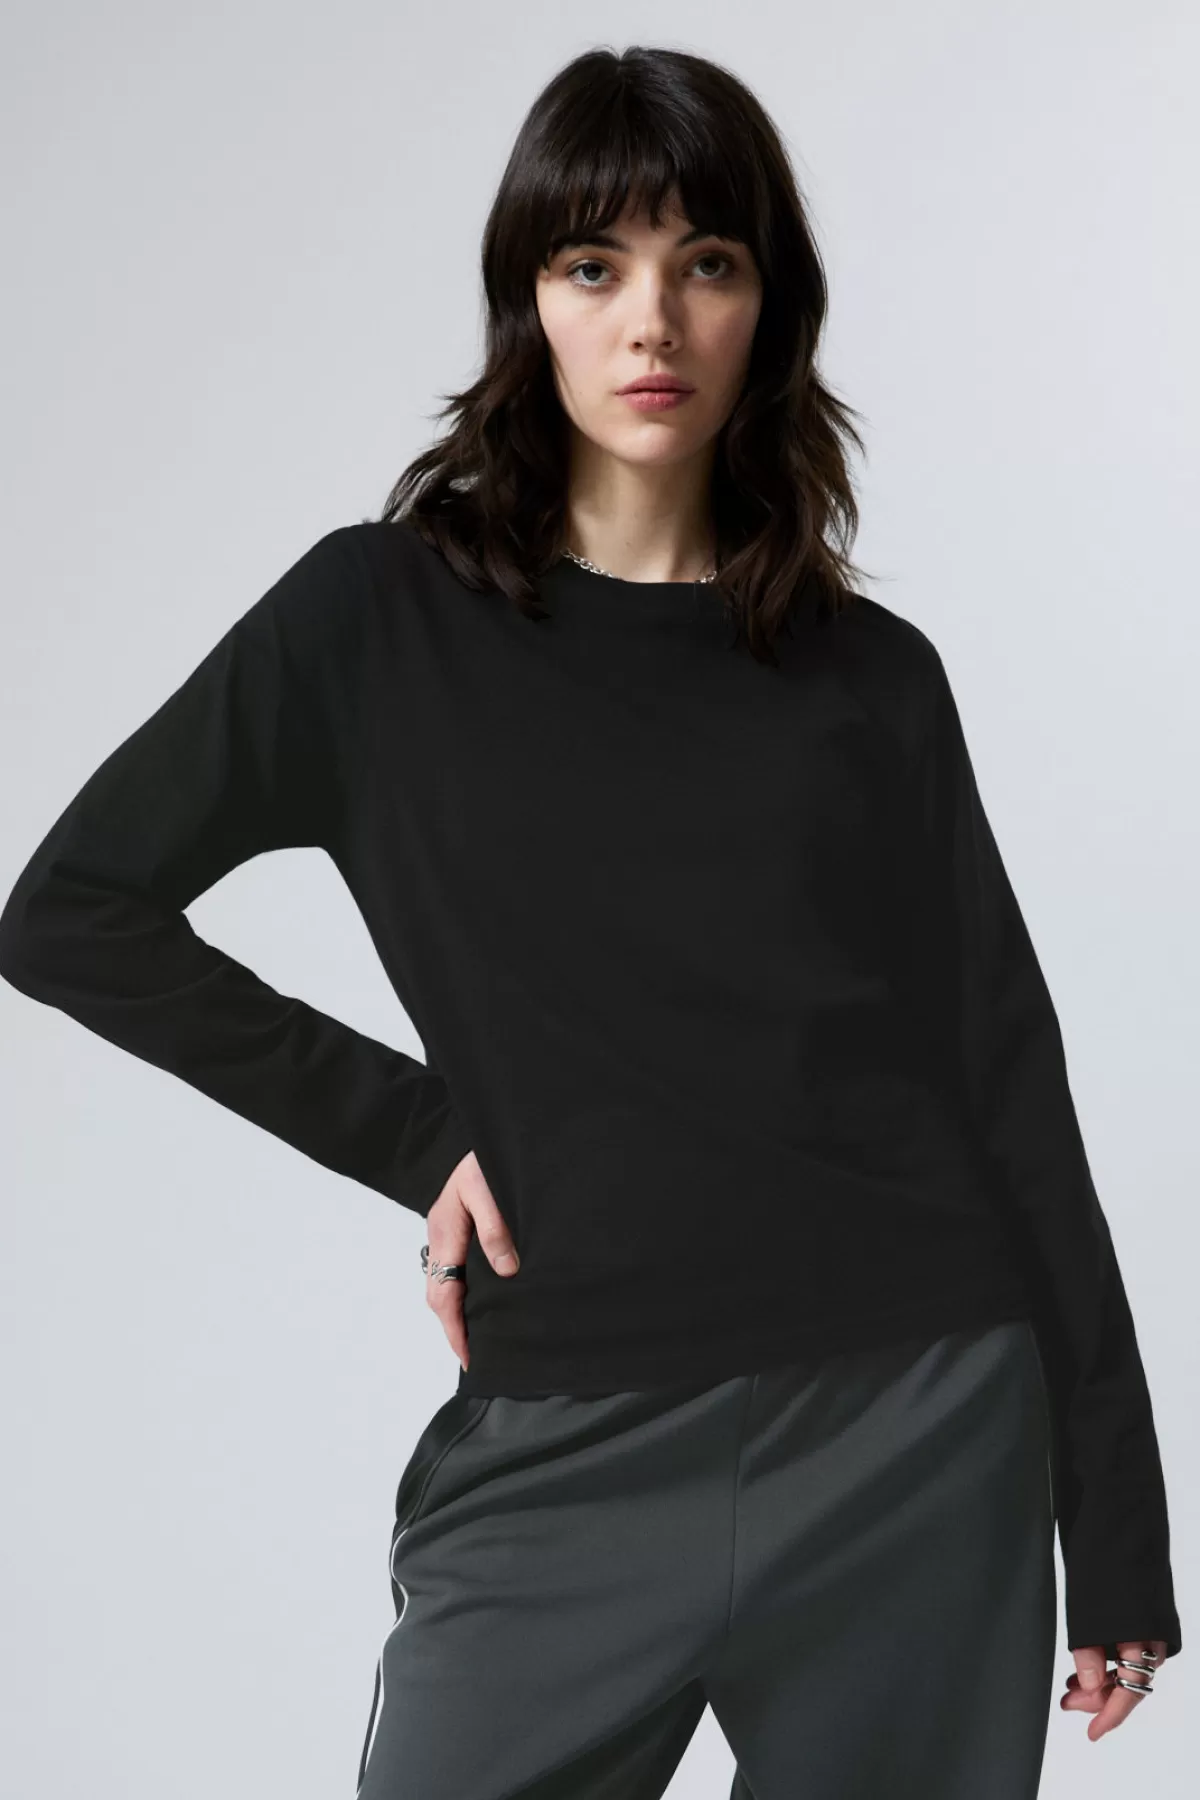 Weekday Essence Standard Long Sleeve Black Fashion